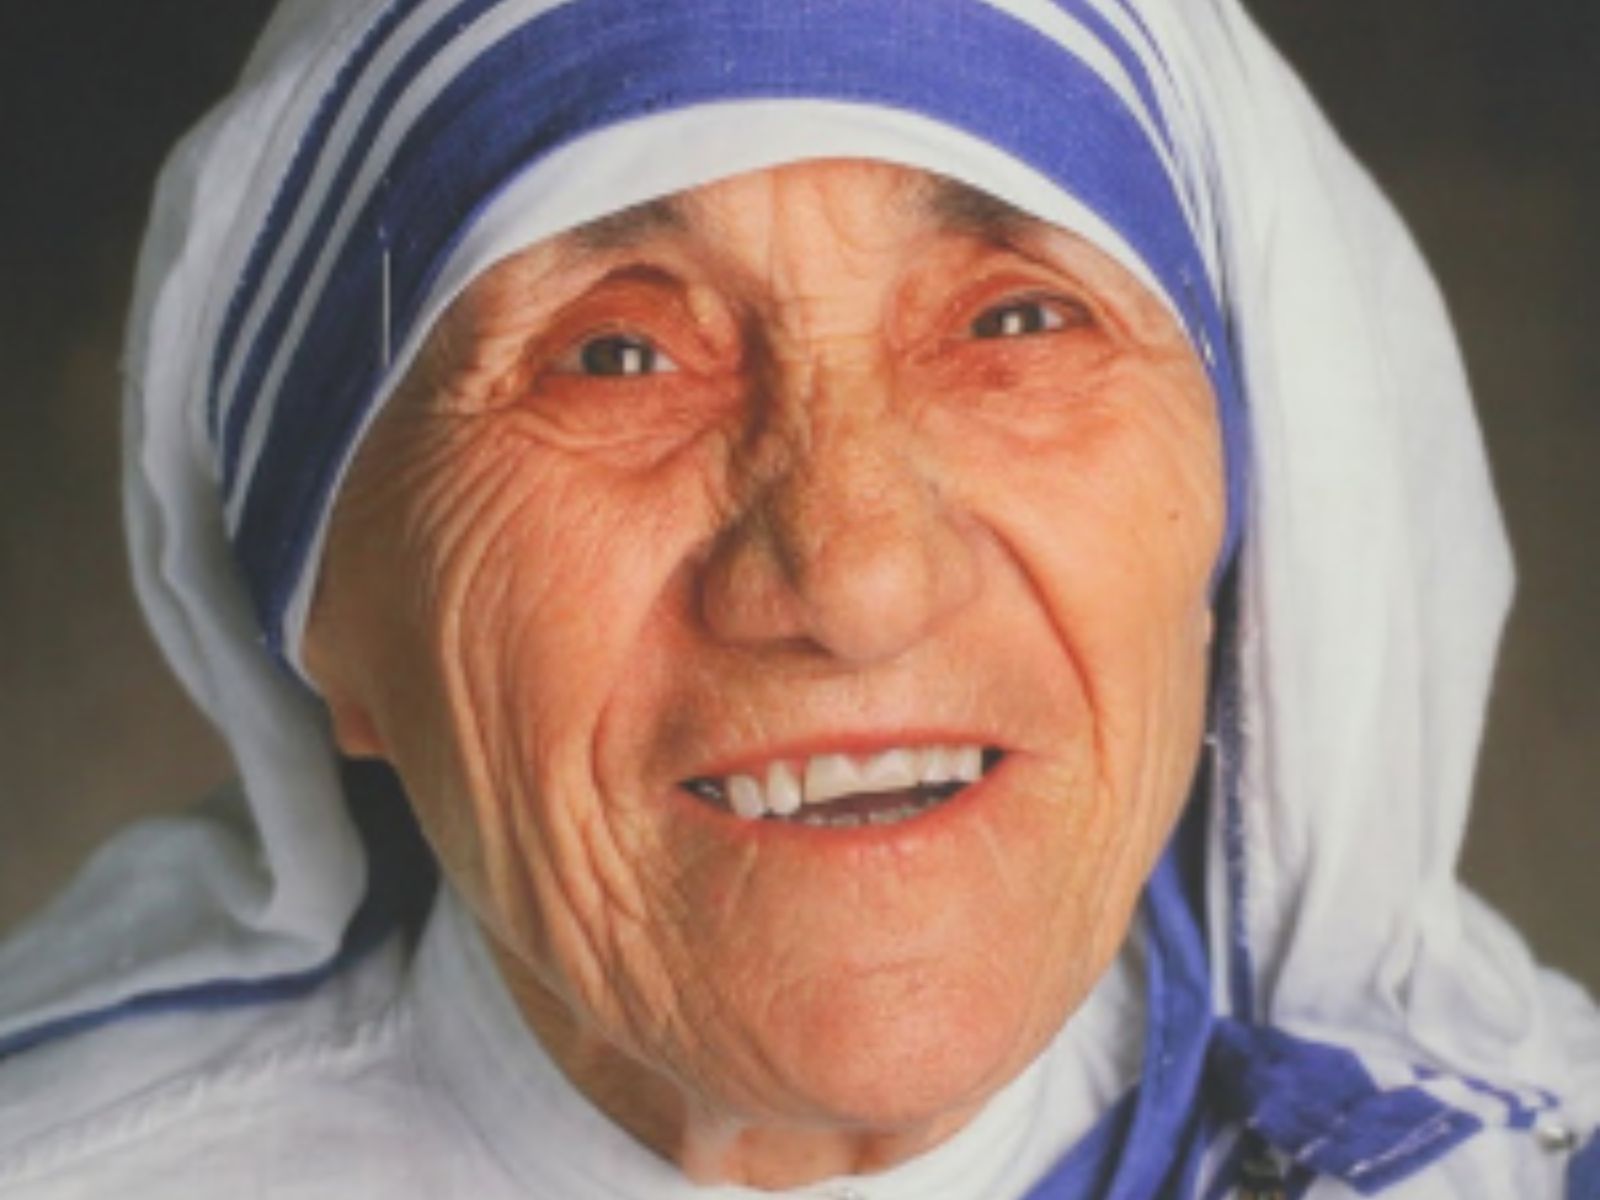 Madre Teresa De Calcutá